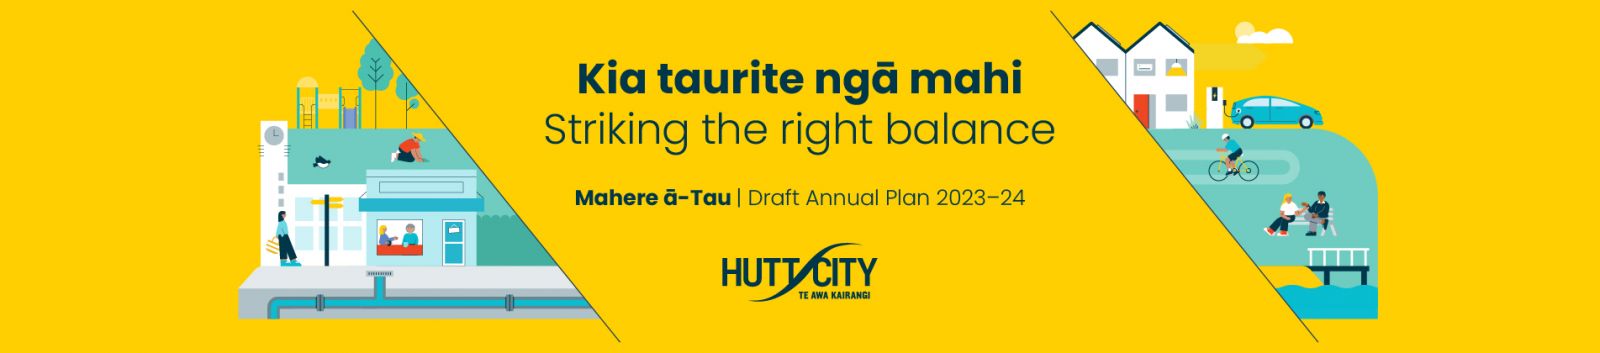 Striking the right balance: draft Annual Plan 2023-24 banner image